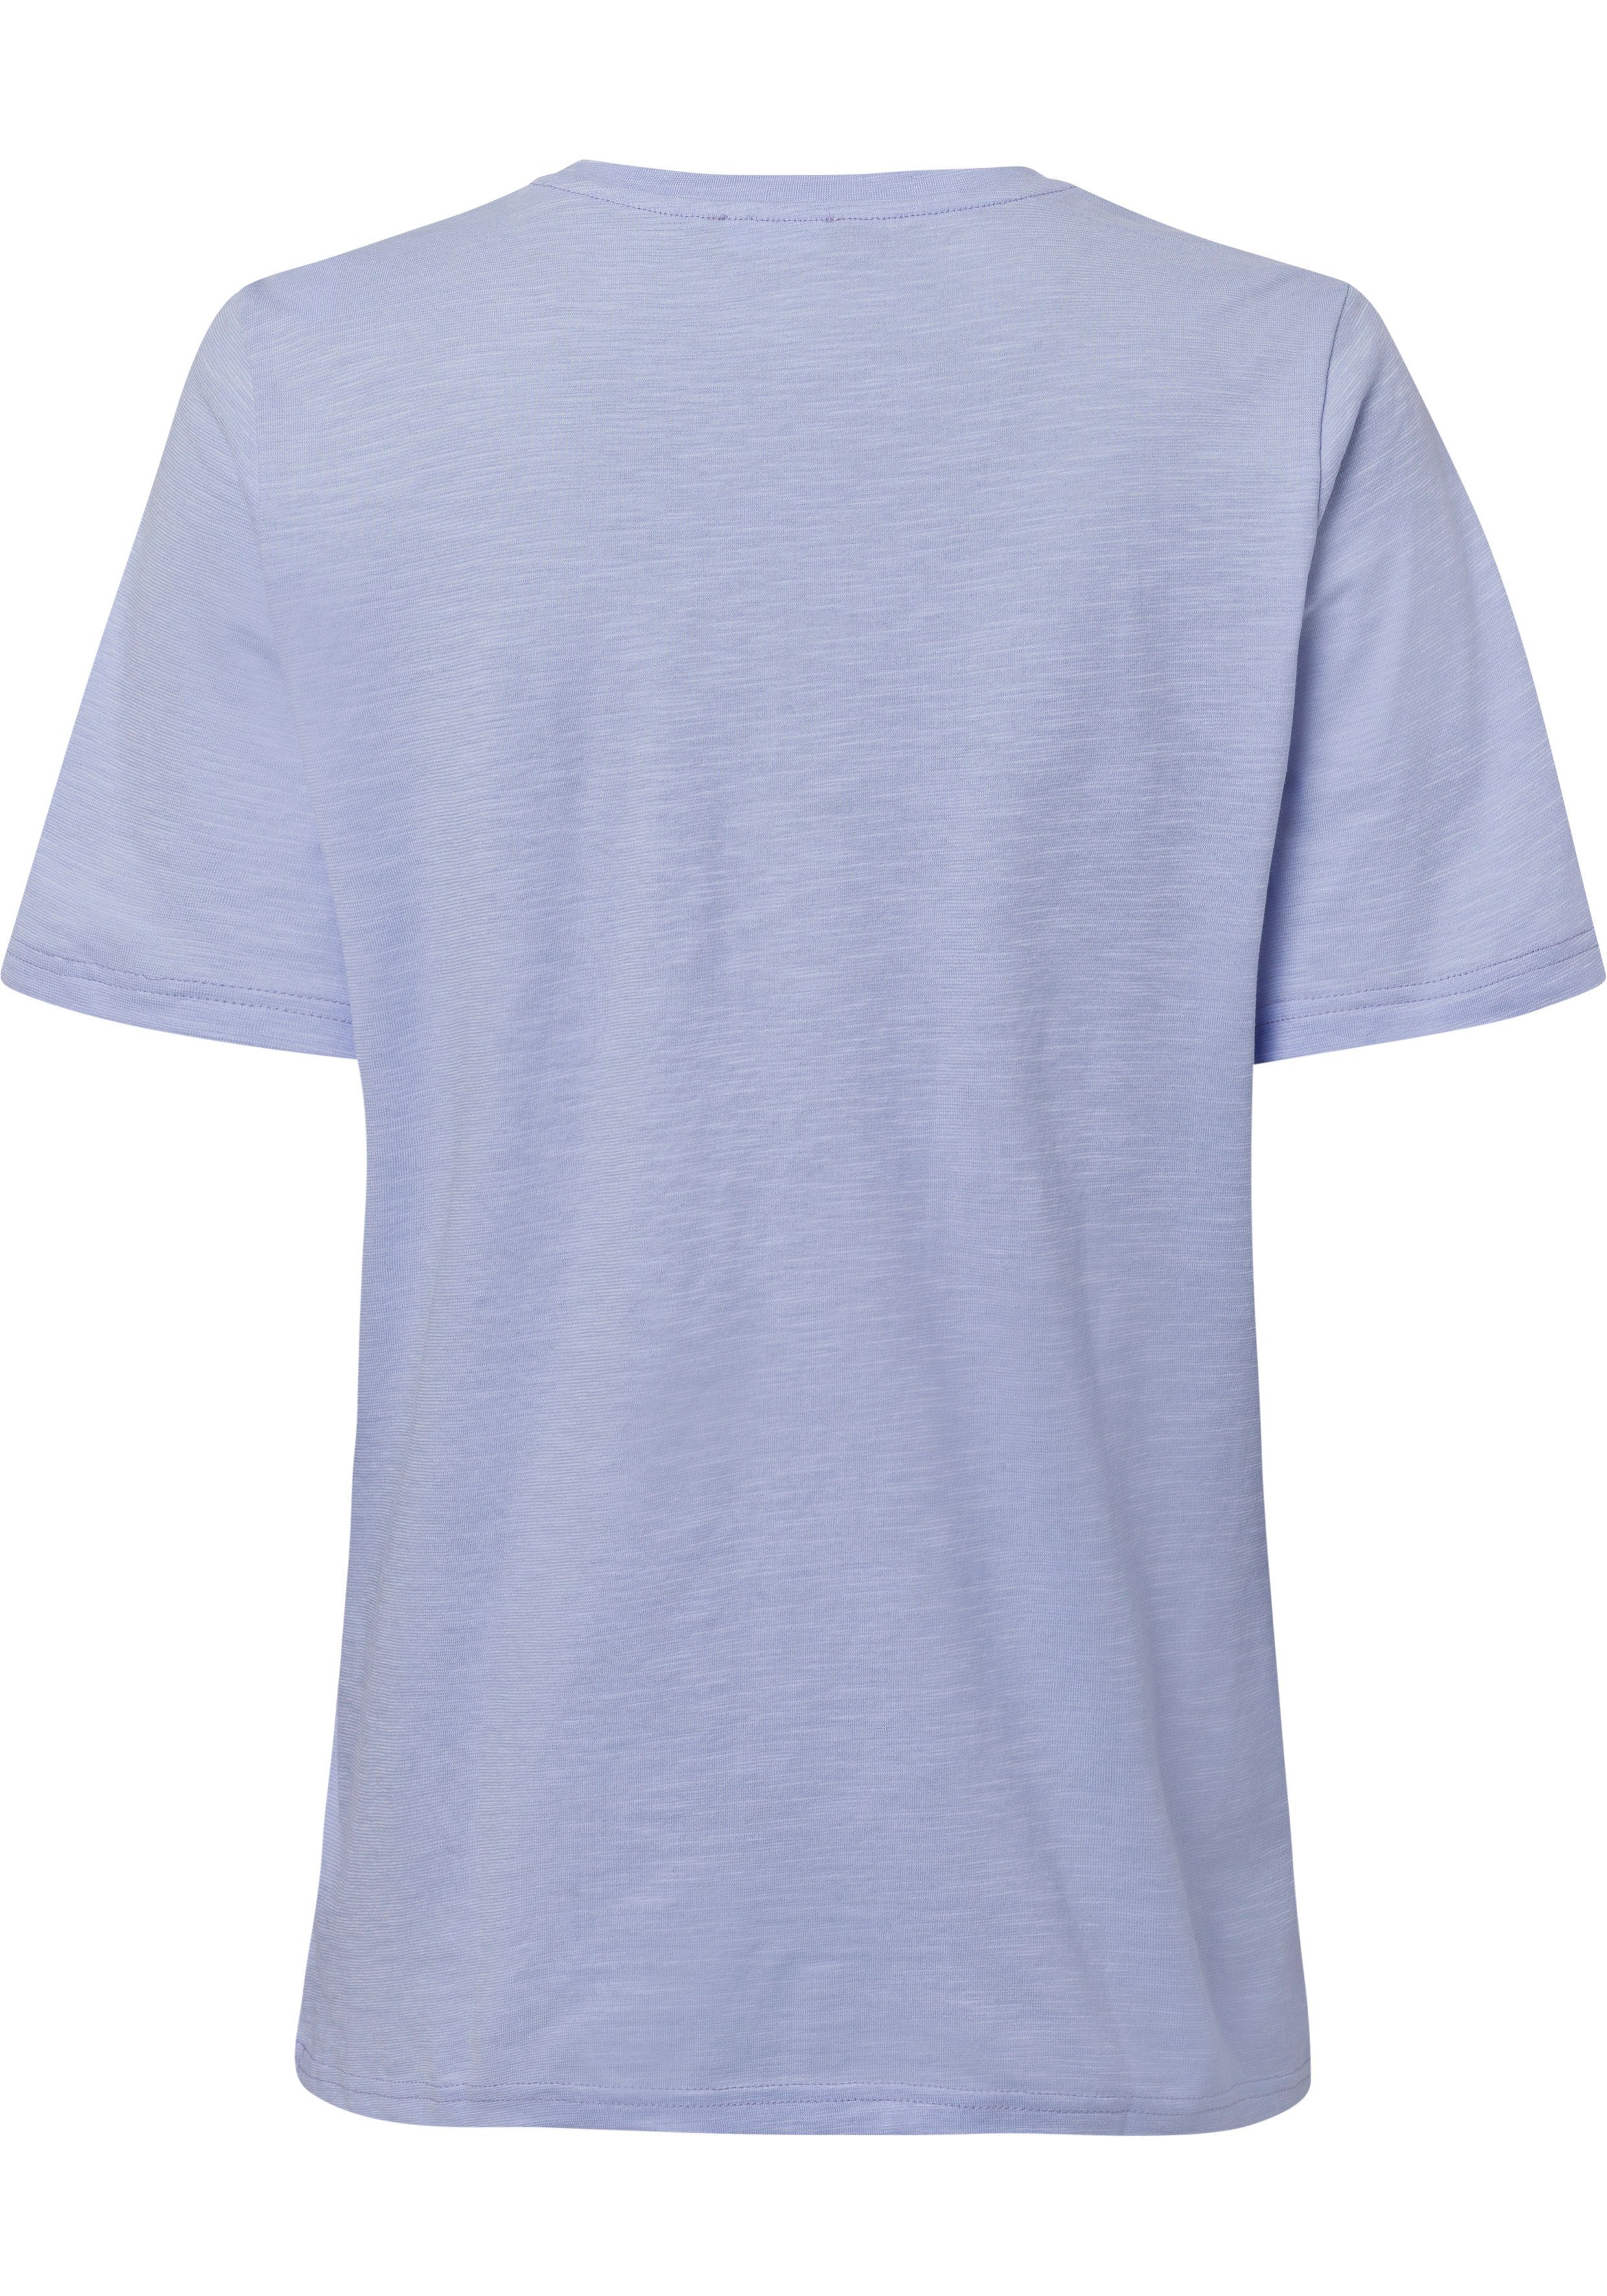 United Colors T-Shirt in cleaner Benetton flieder of Basic-Optik